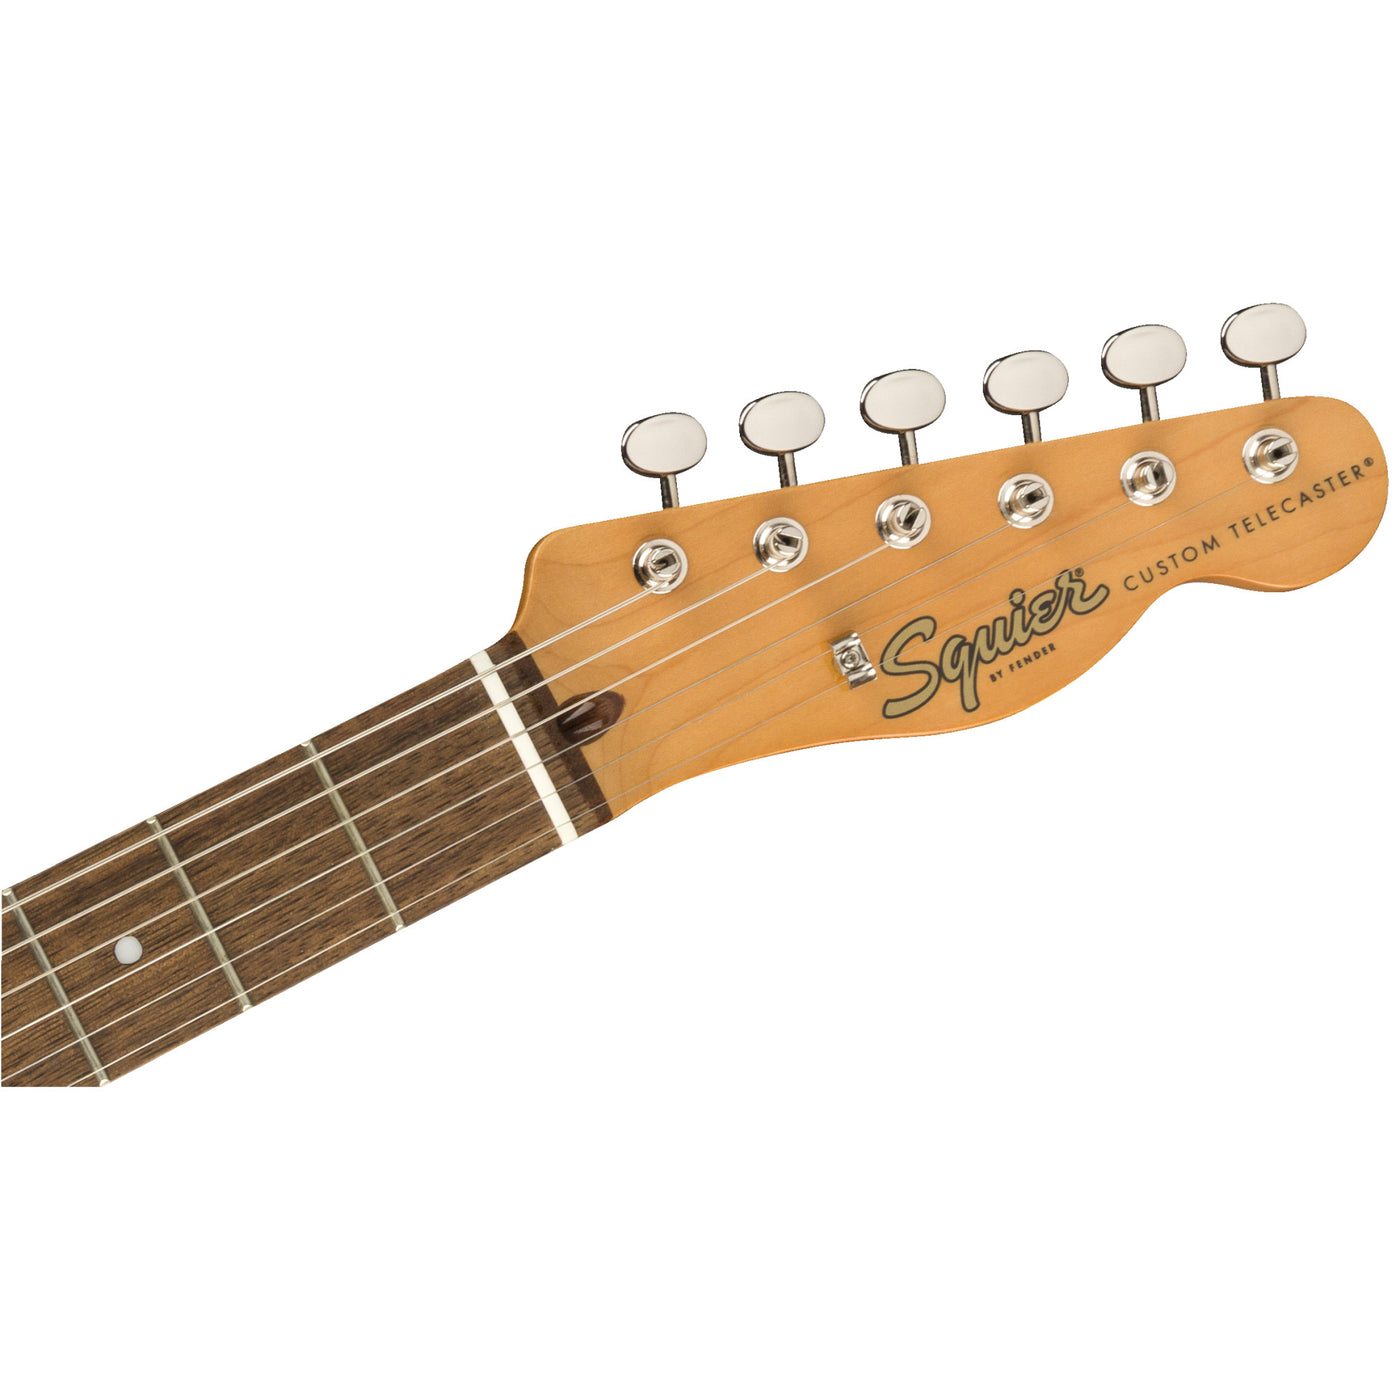 Fender Classic '60s Custom Telecaster, 3-Color Sunburst (0374040500)